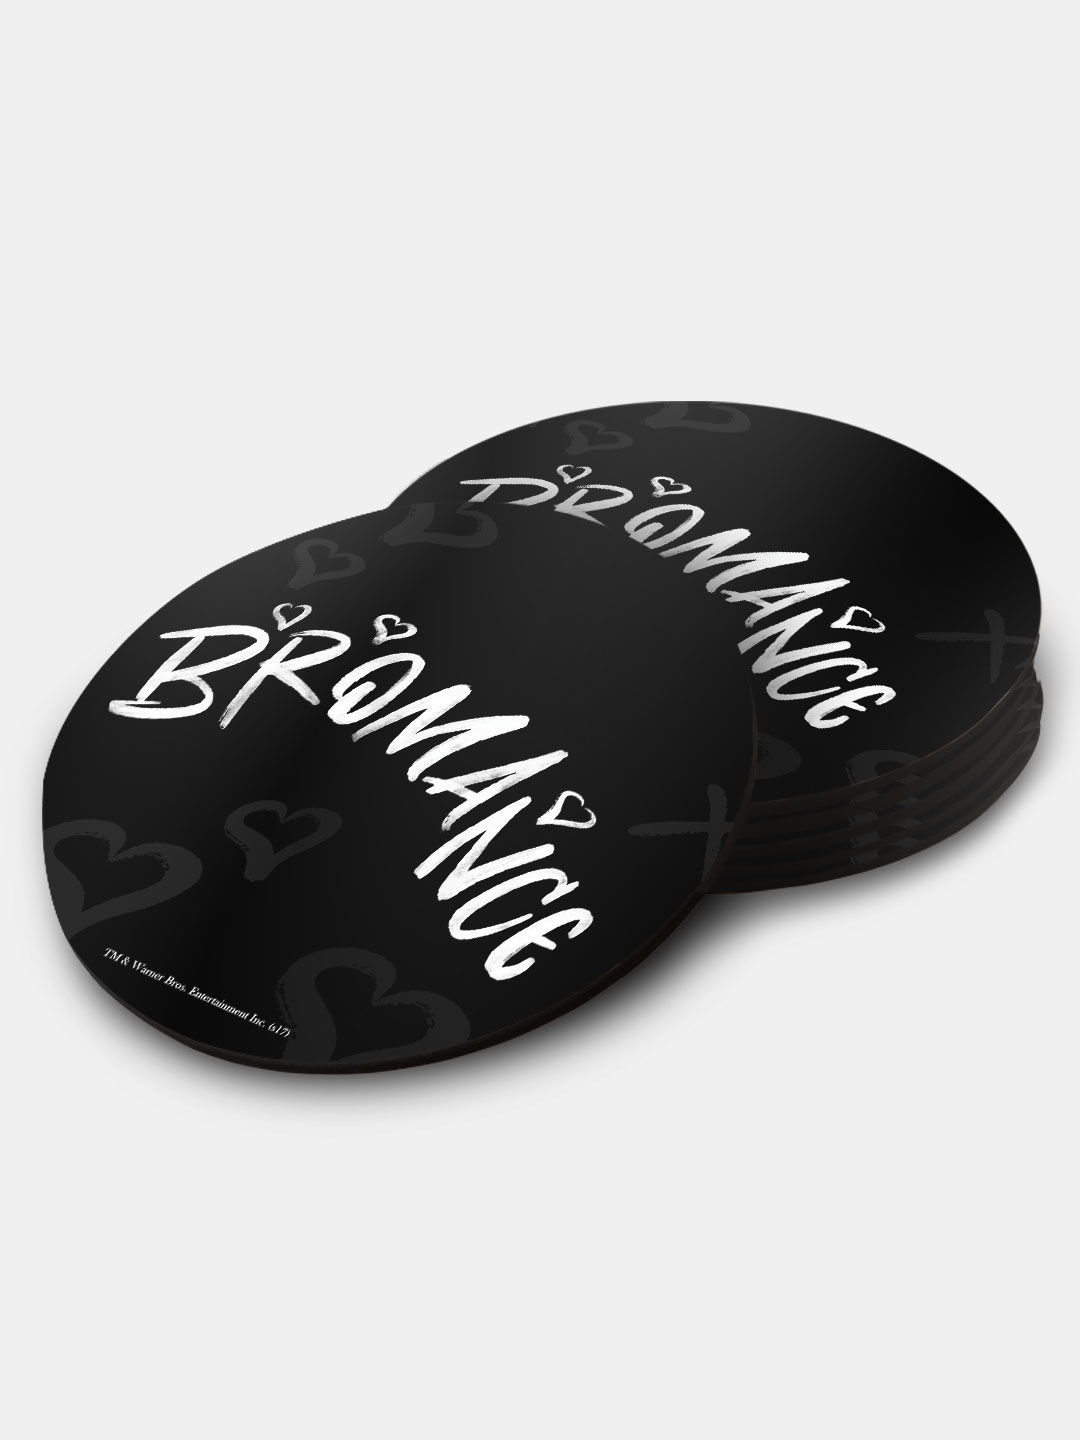 Buy Valentine Bromance - Circular Coasters Coasters Online